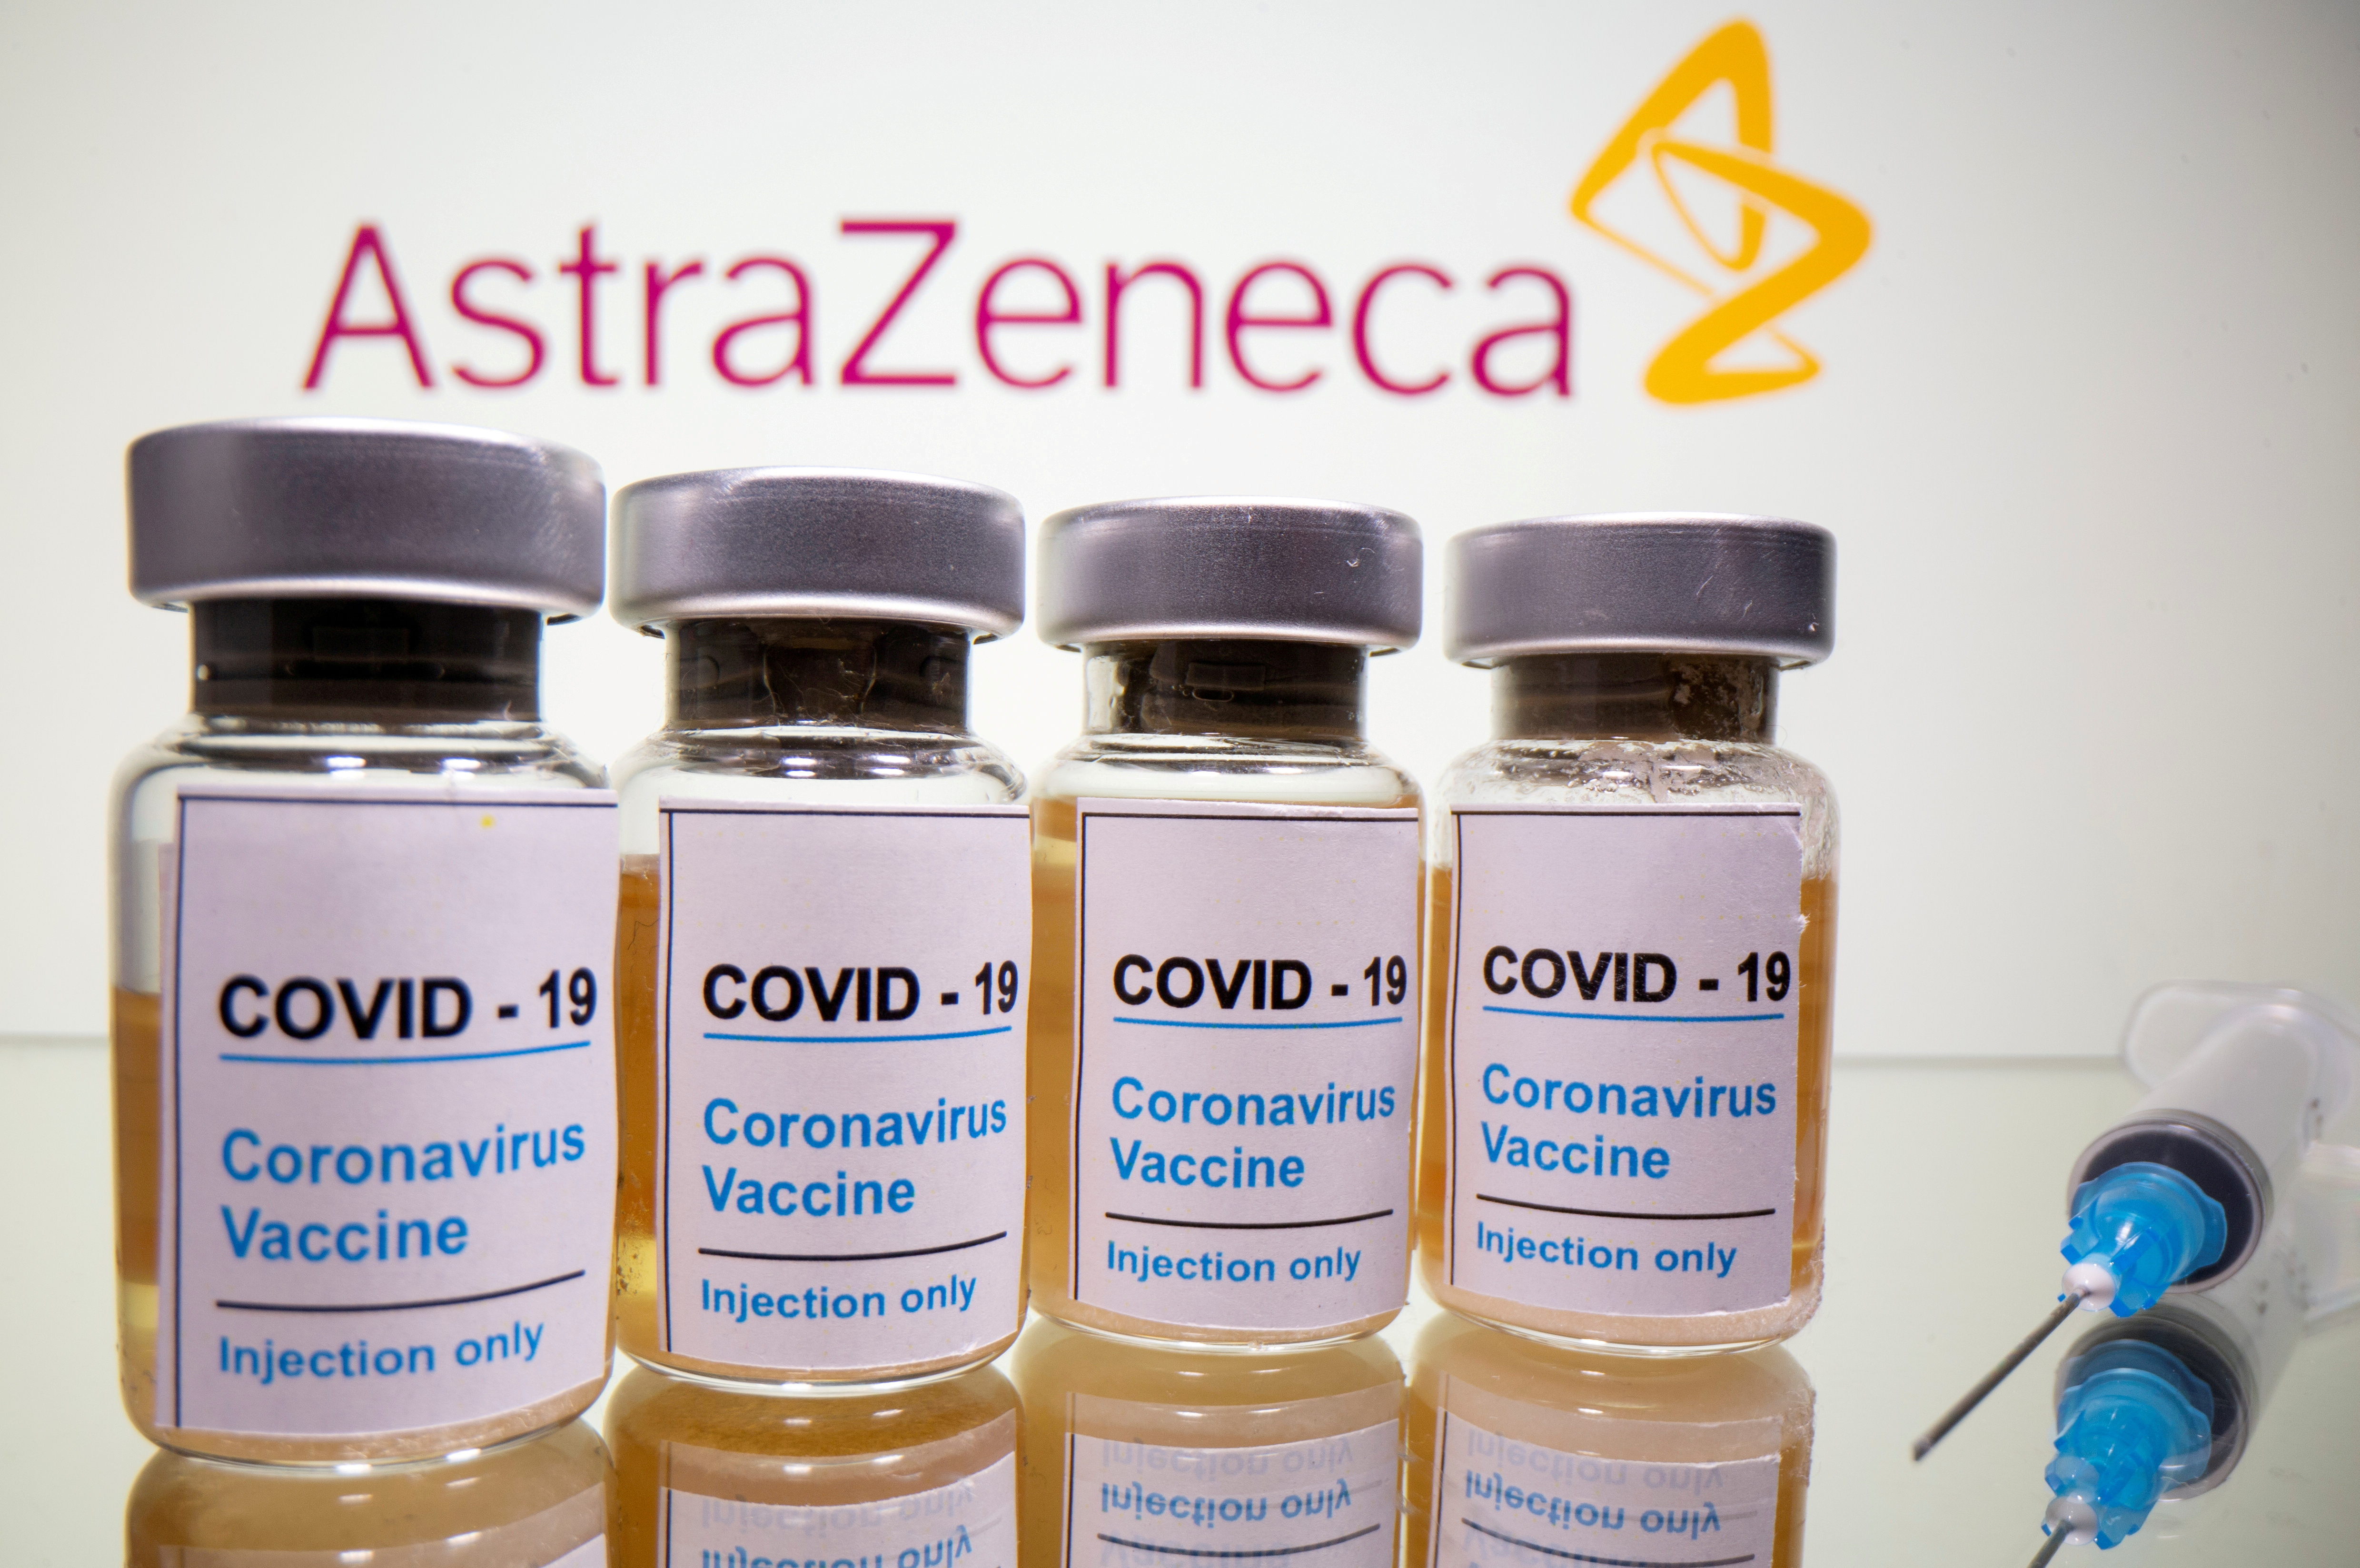 Astrazeneca vaccine malaysia registration link